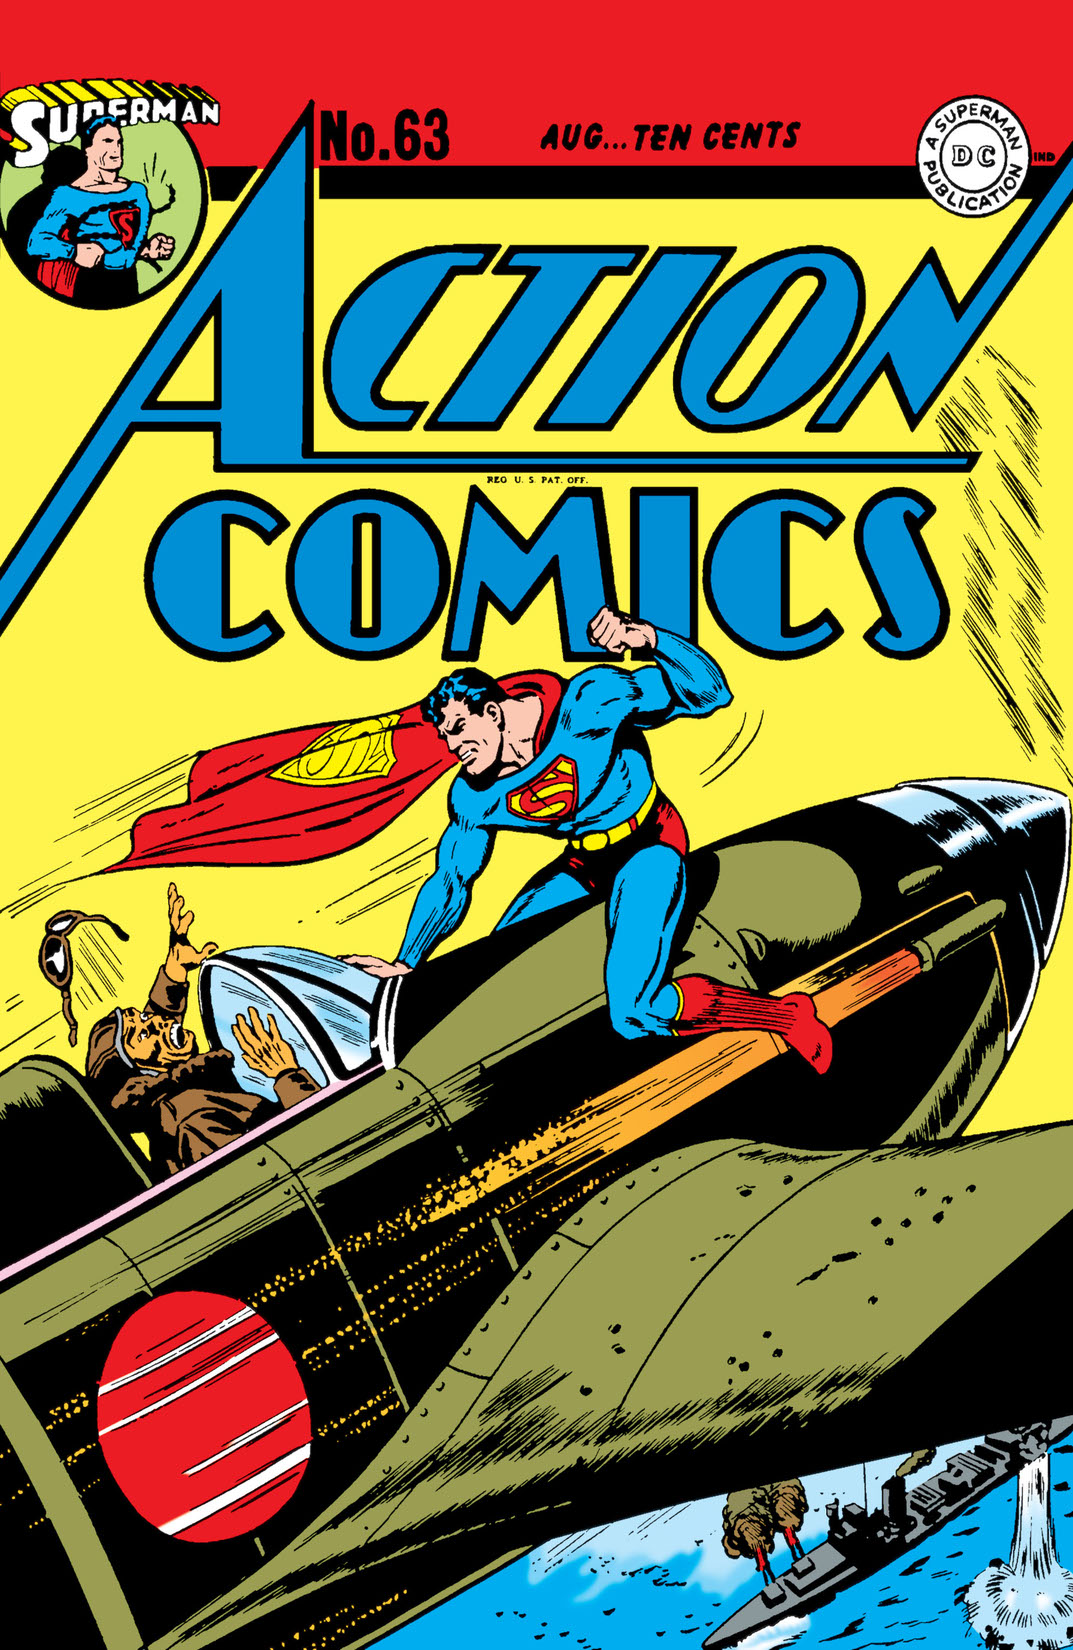 Action Comics (1938-) #63 preview images